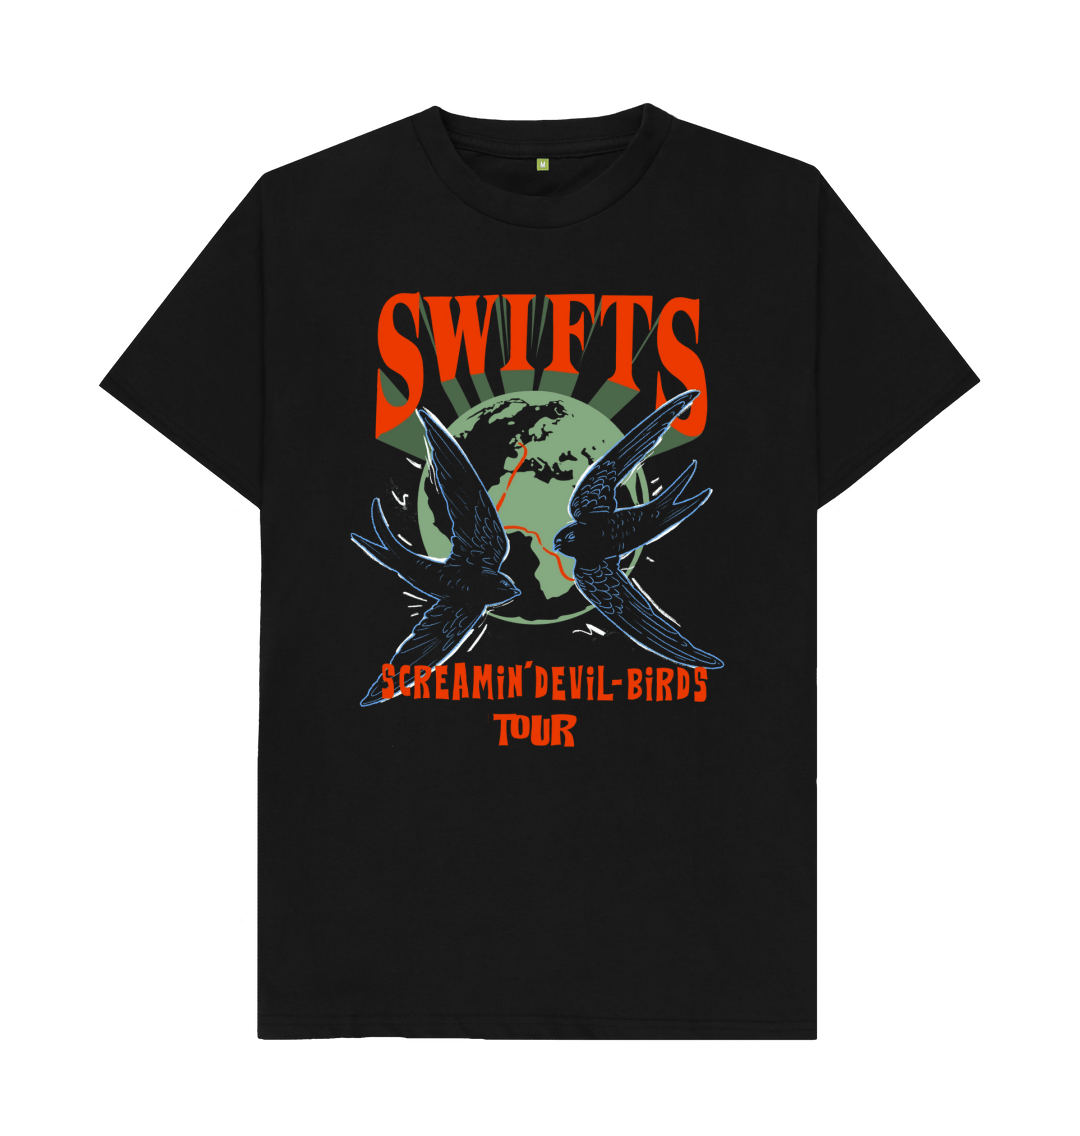 Screamin' Devil-Birds T-shirt